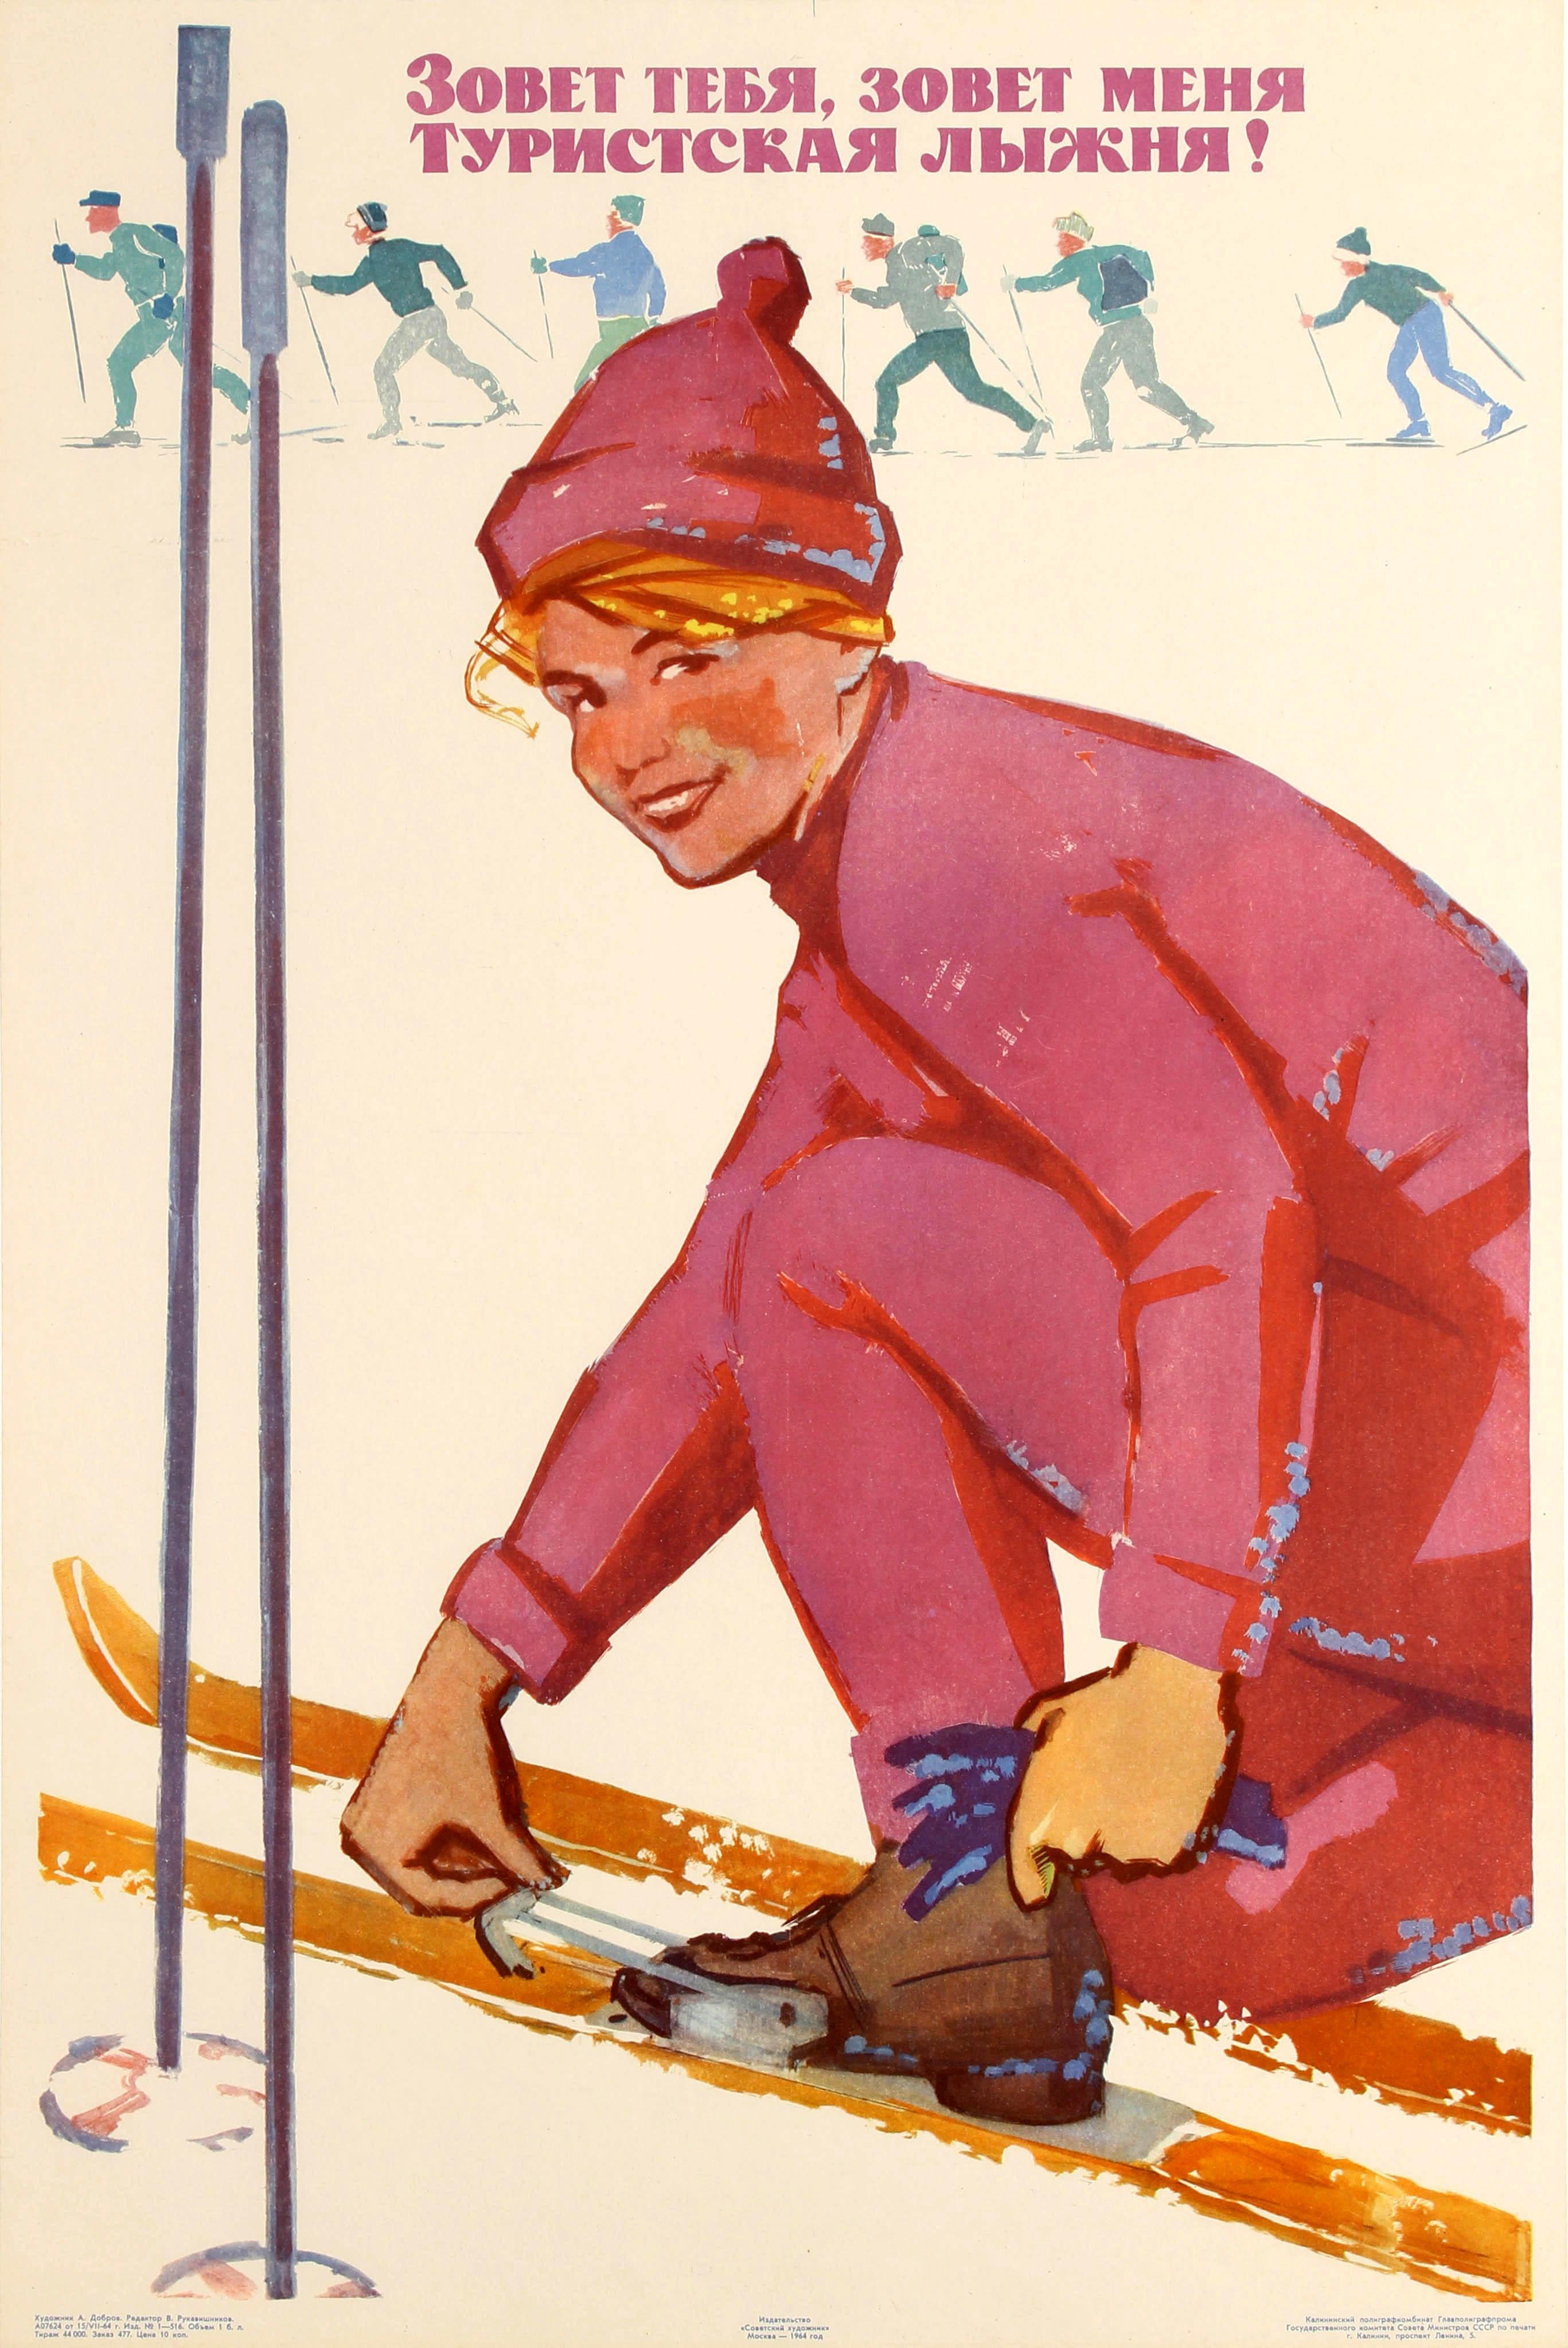 A. Dobrov Print - Original Vintage Soviet Winter Sport Skiing Poster - The Ski Track Is Calling!